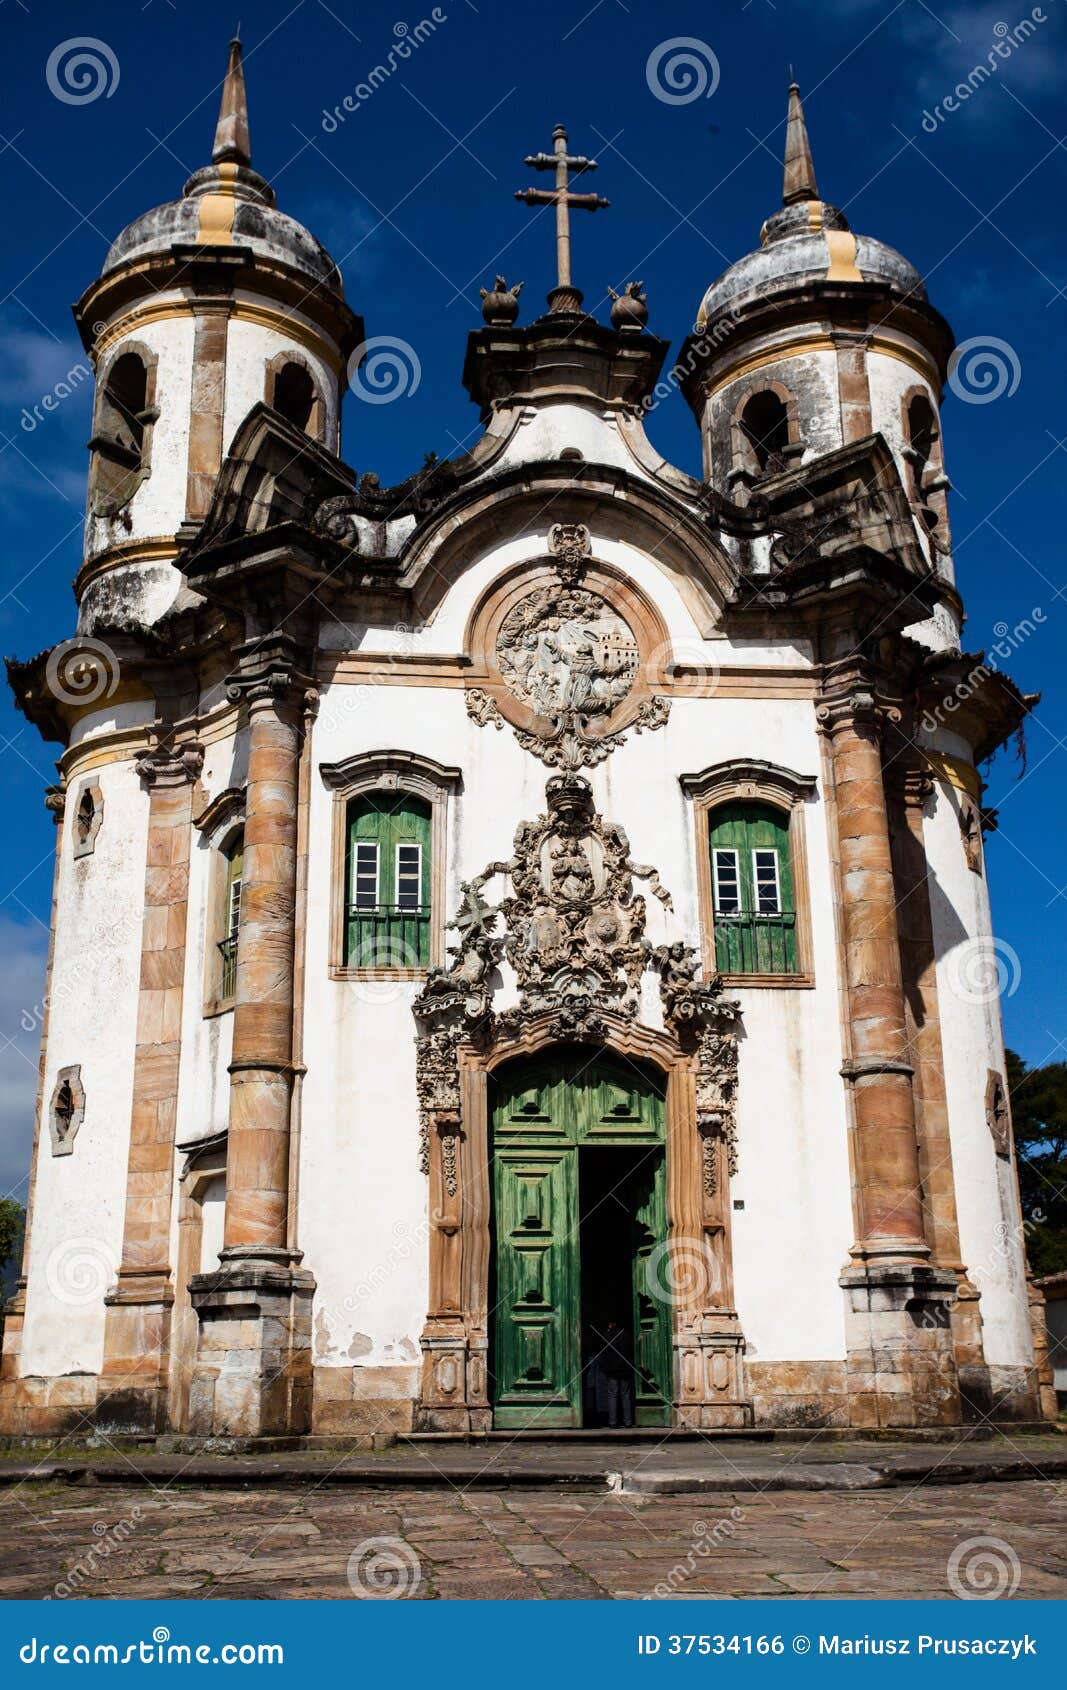 view of the igreja de sao francisco de assis of the unesco world heritage city of ouro preto in minas gerais brazil